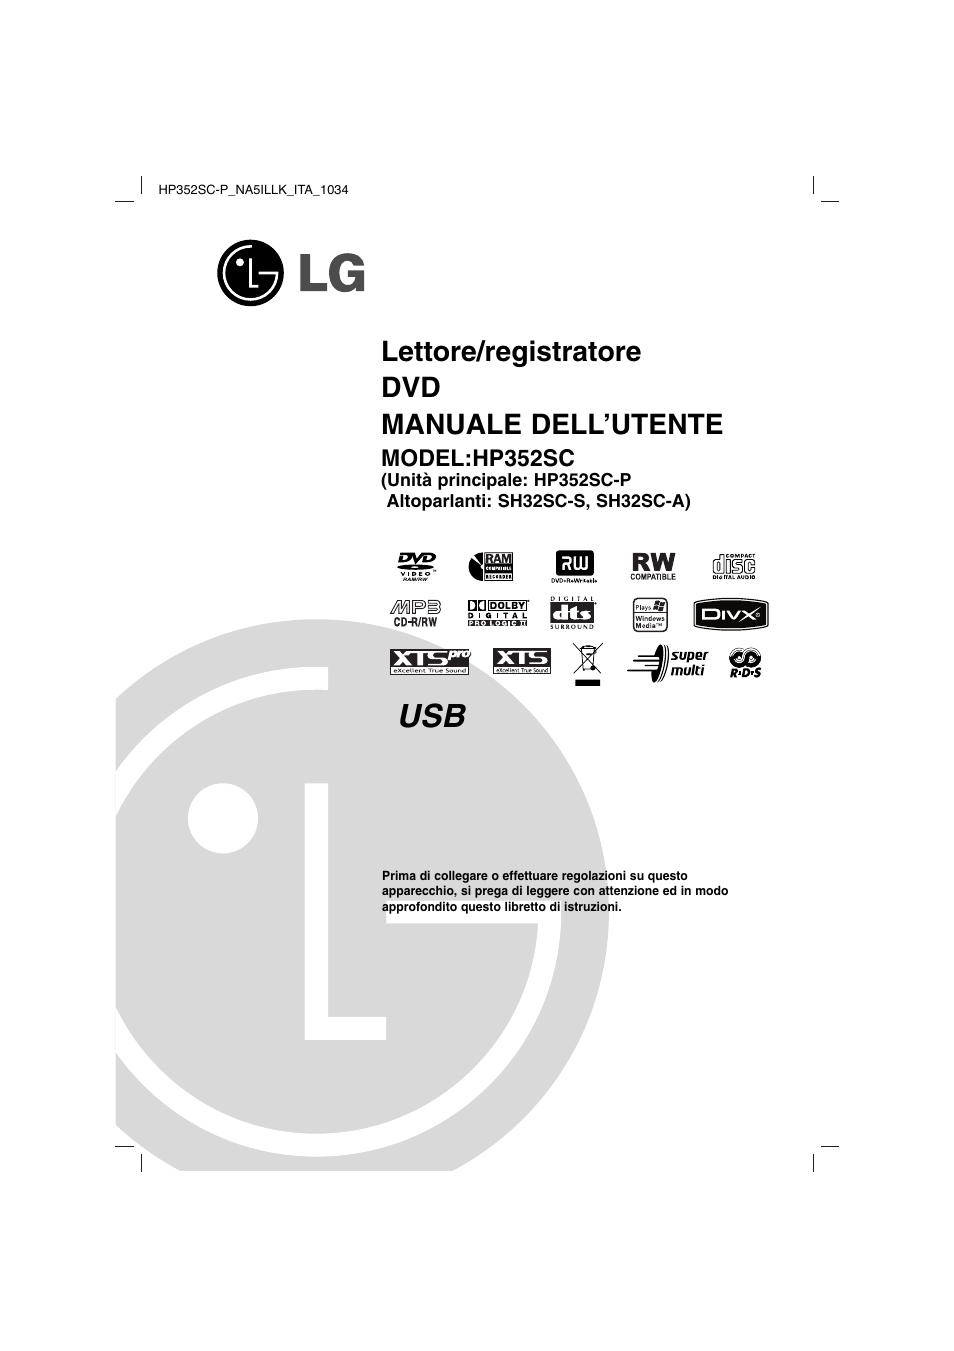 LG HP352SC Manuale d'uso | Pagine: 54